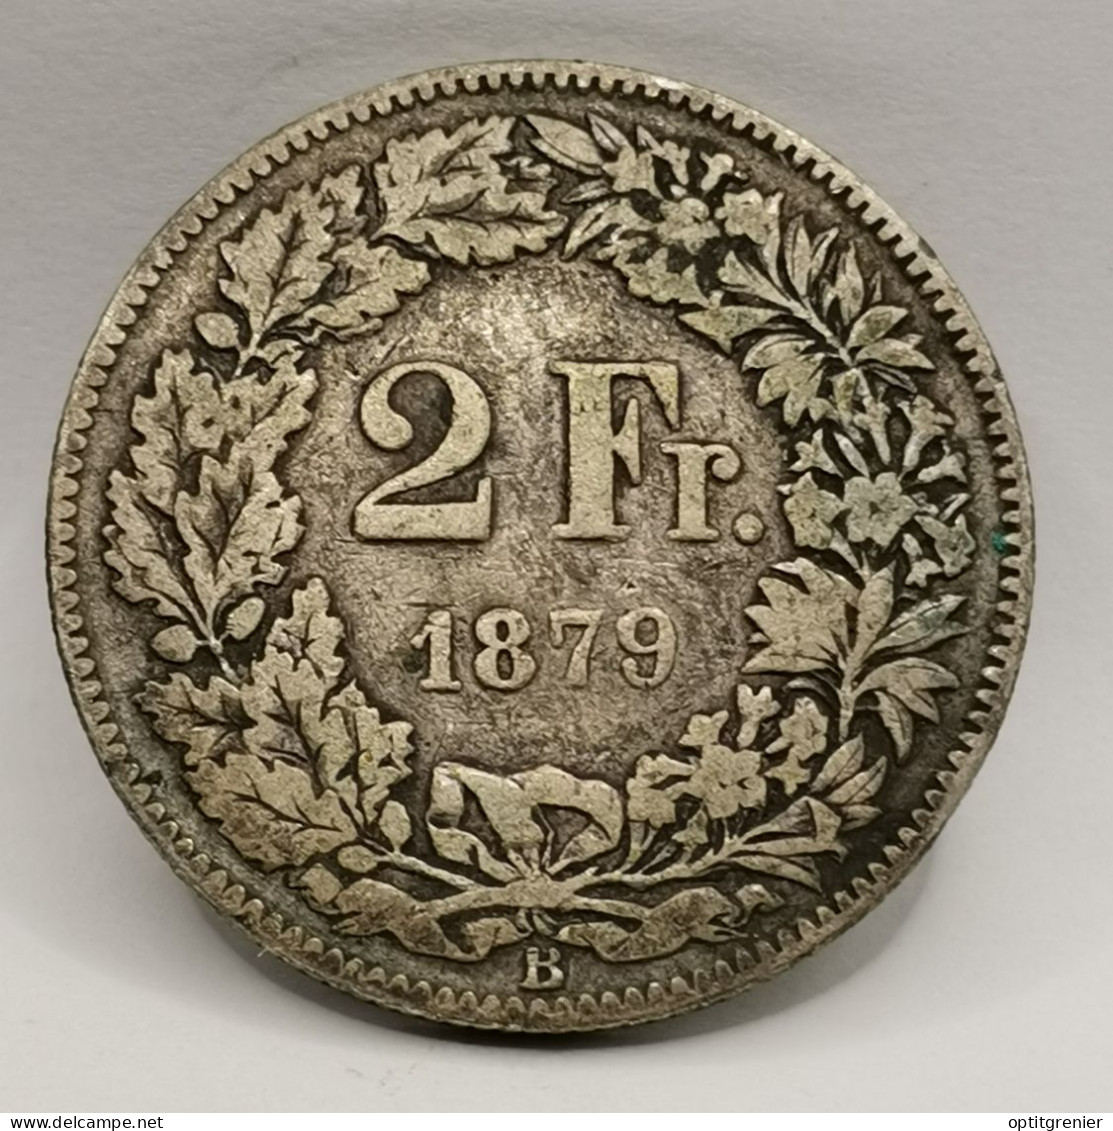 2 FRANCS SUISSE ARGENT 1879 B BERNE HELVETIA DEBOUT / SWITZERLAND SILVER - 2 Franken